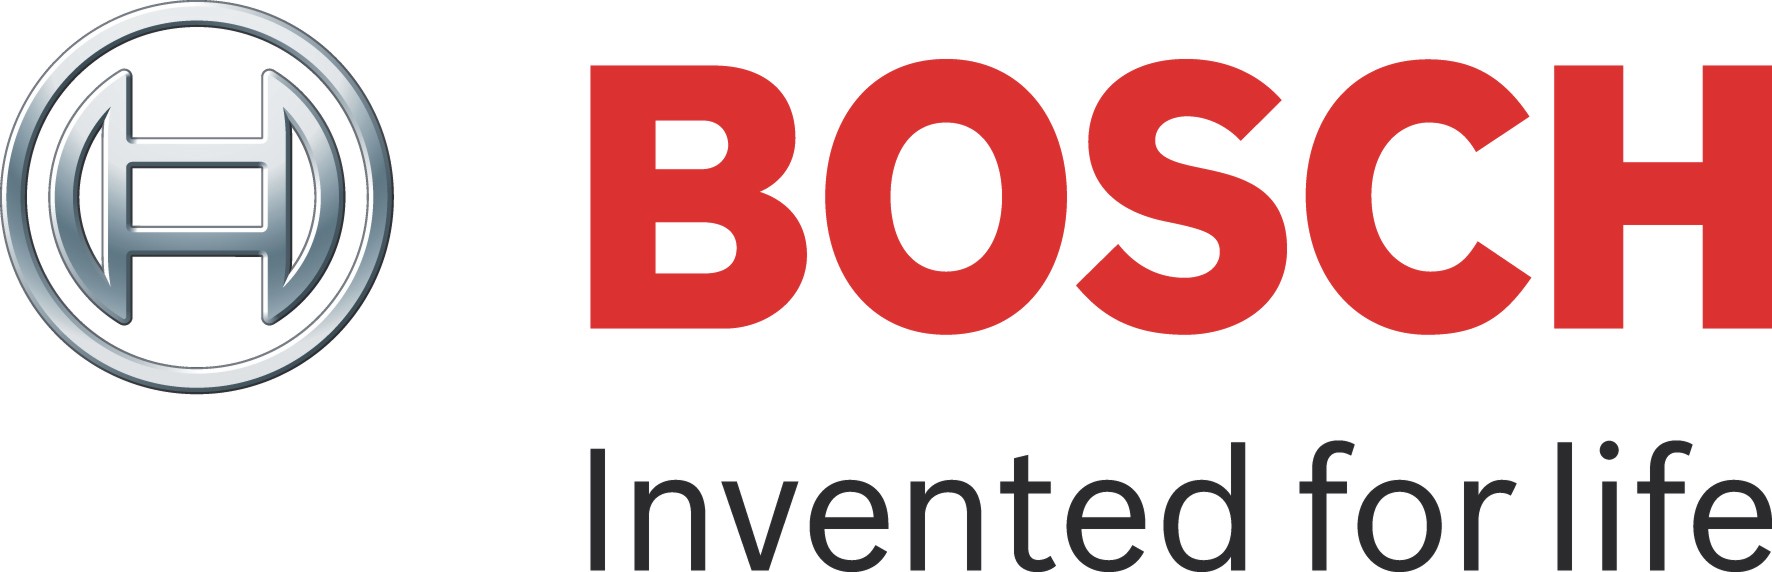 Bosch_Logo_JPG